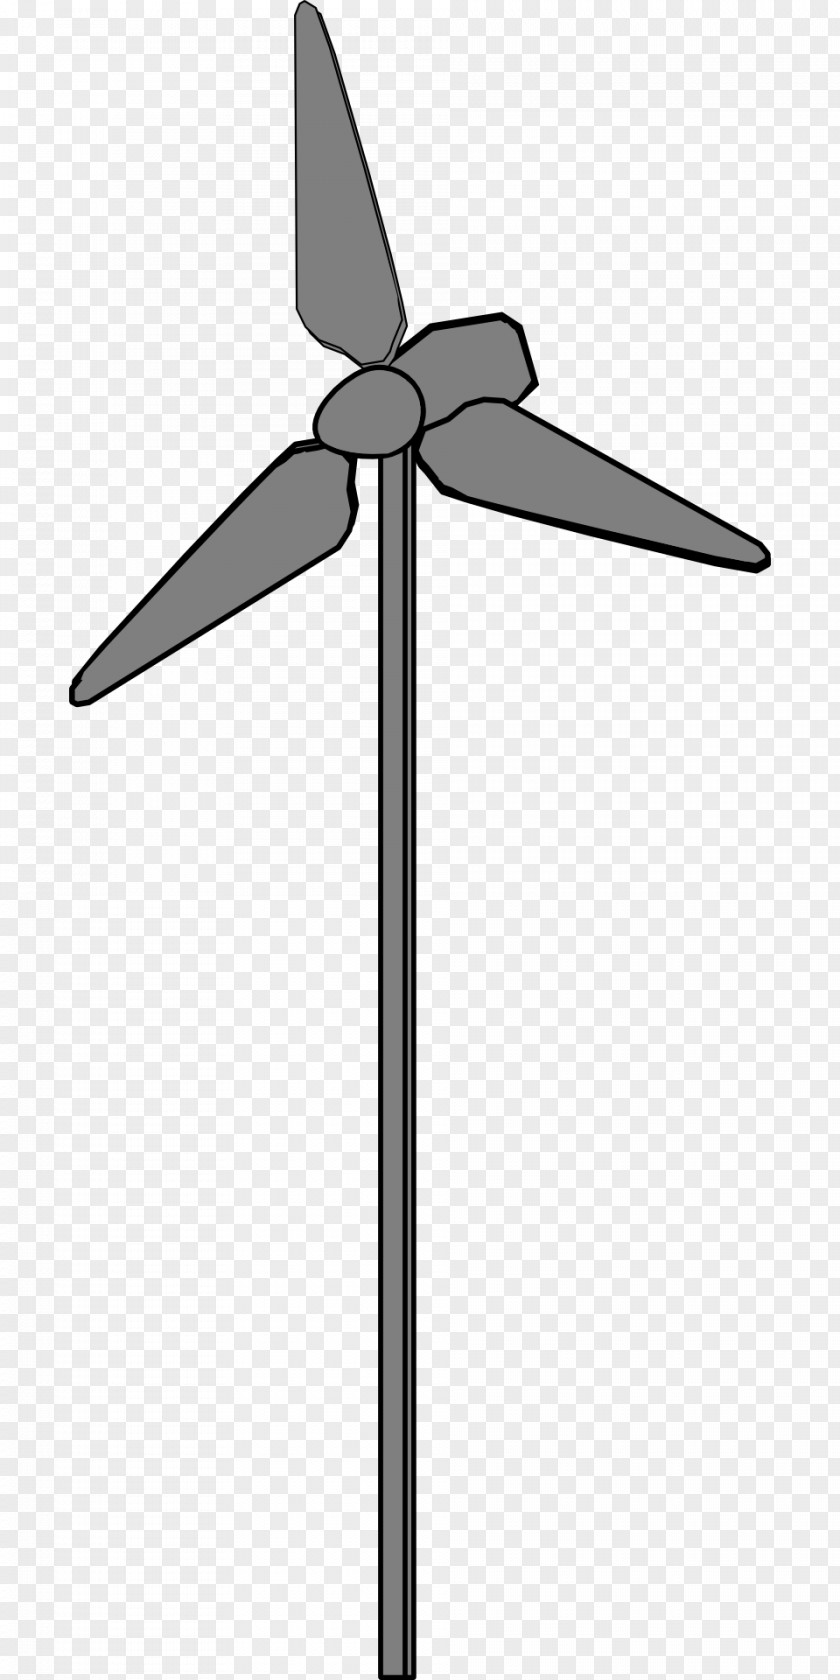 Wind Turbine Electricity Clip Art PNG